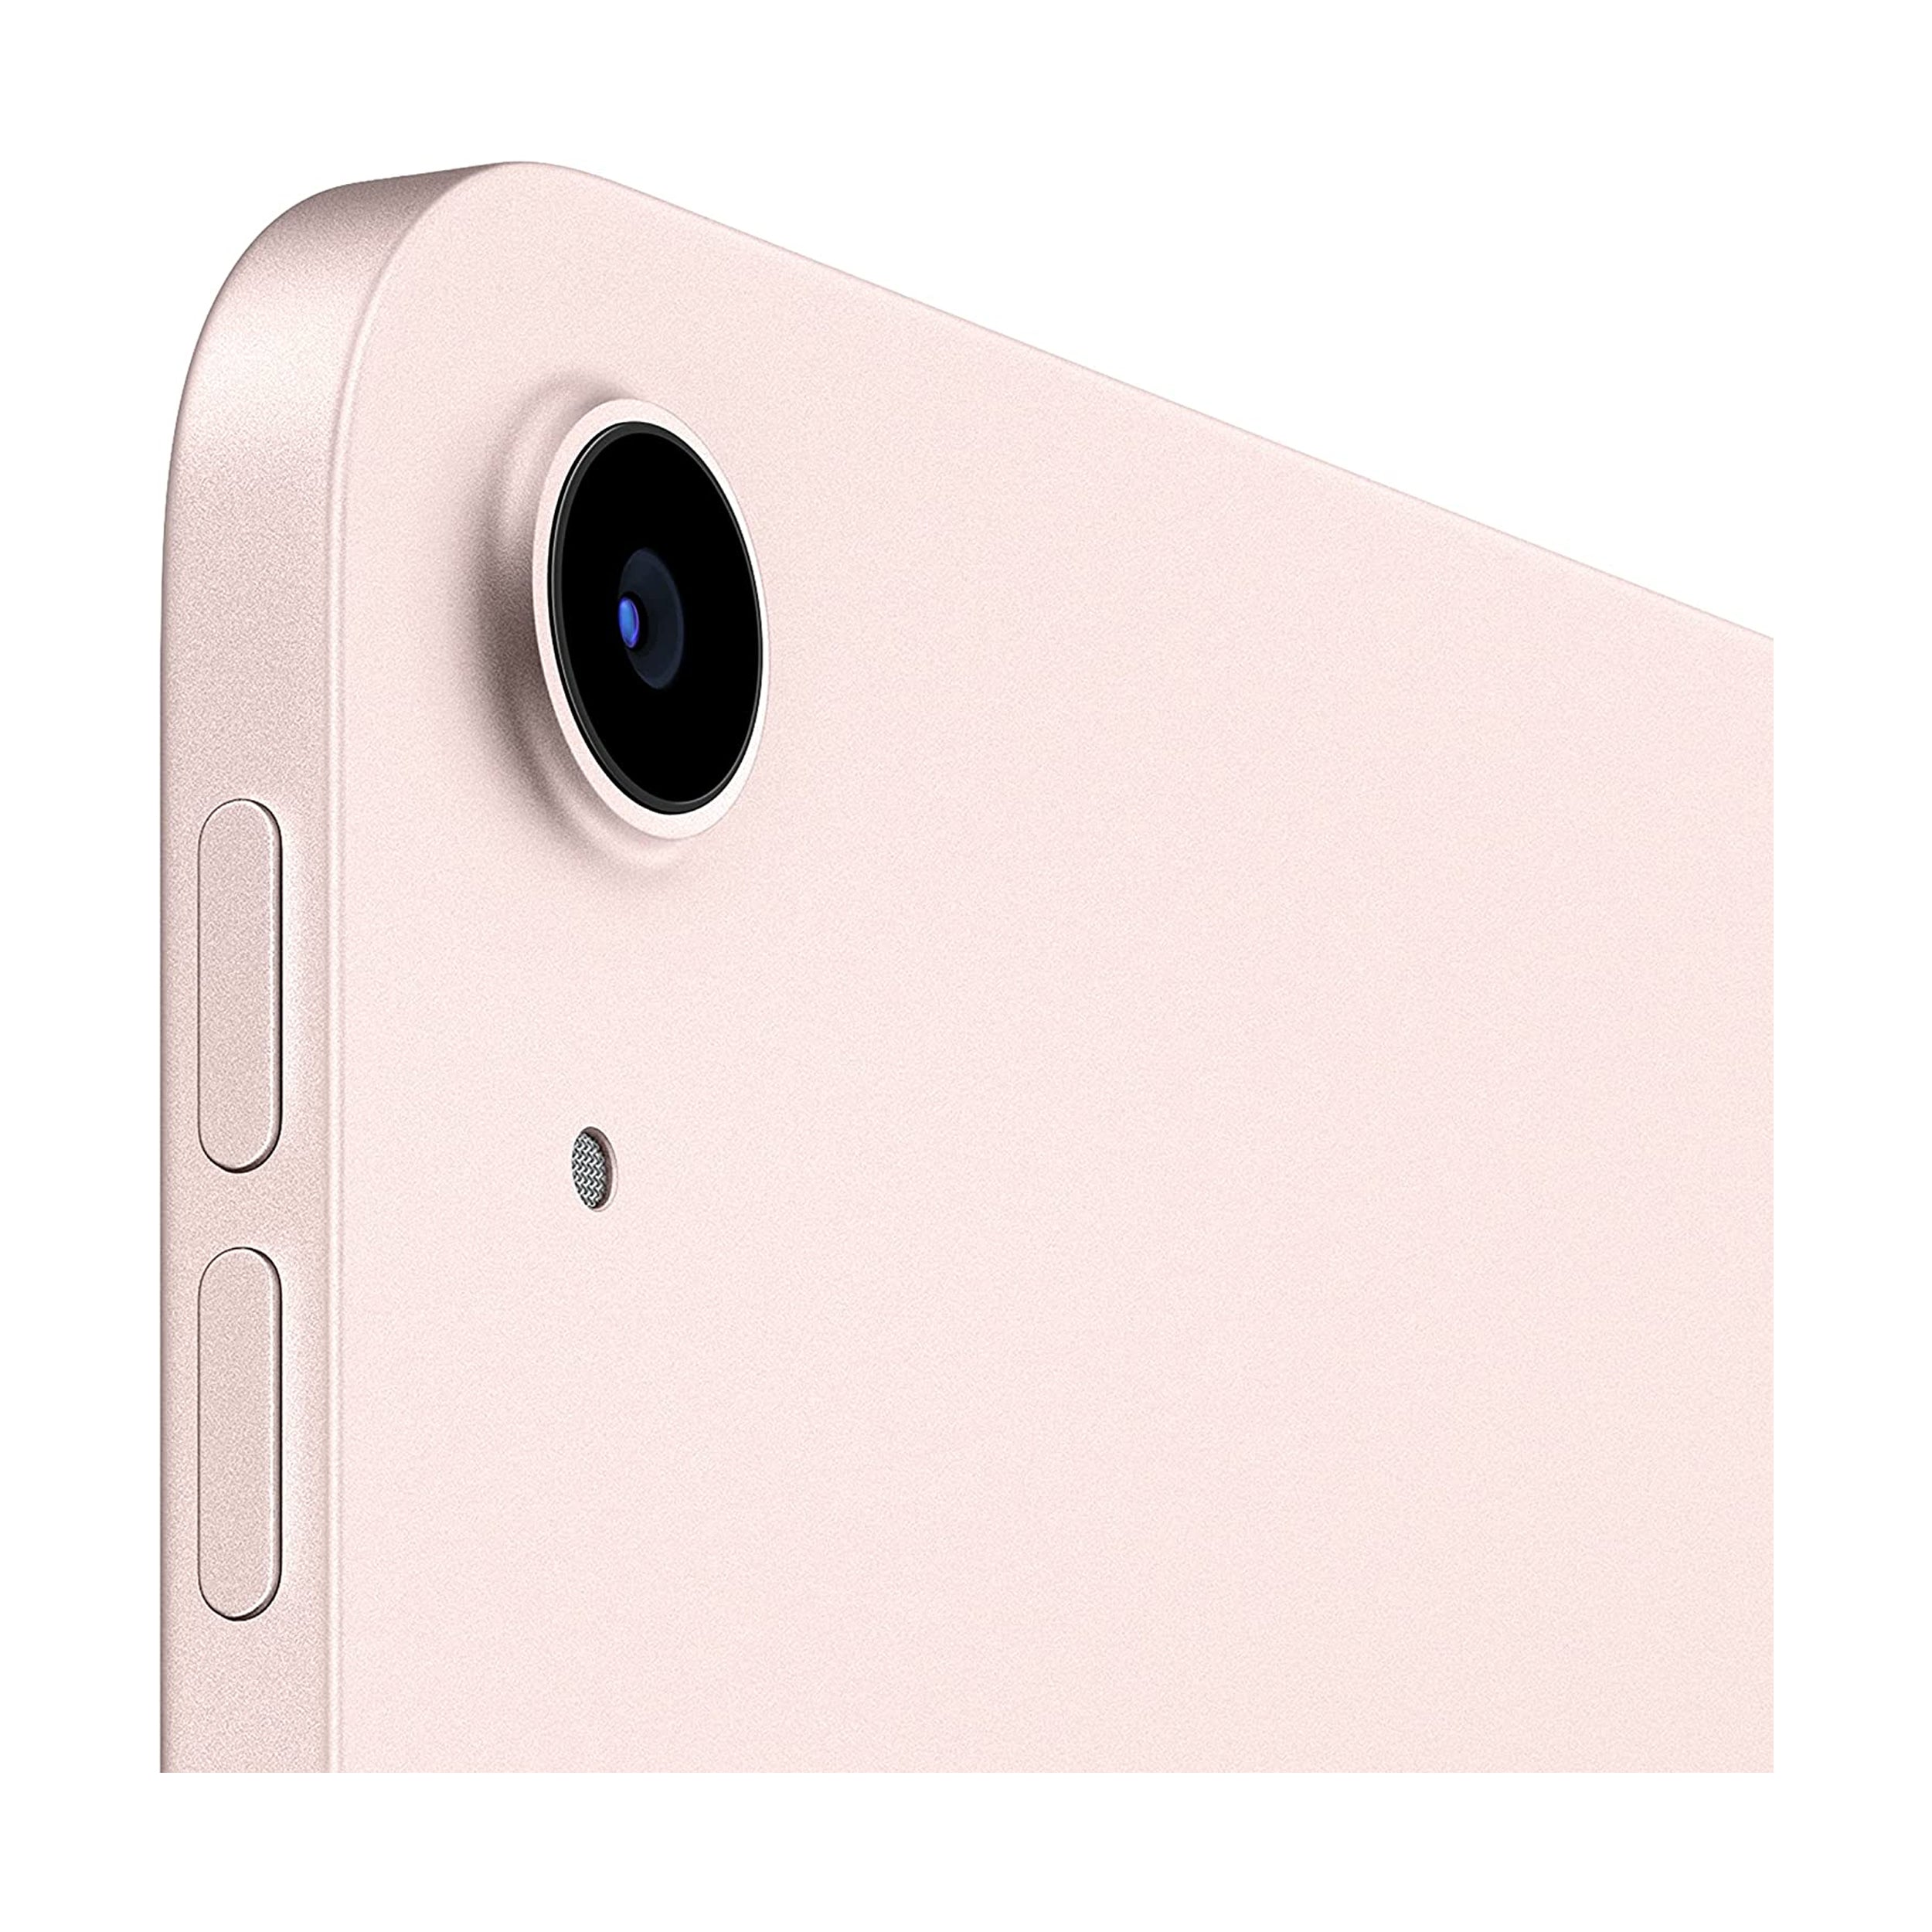 2022 Apple 10.9-inch iPad Air (Wi-Fi, 256GB) - Pink (5th Generation)